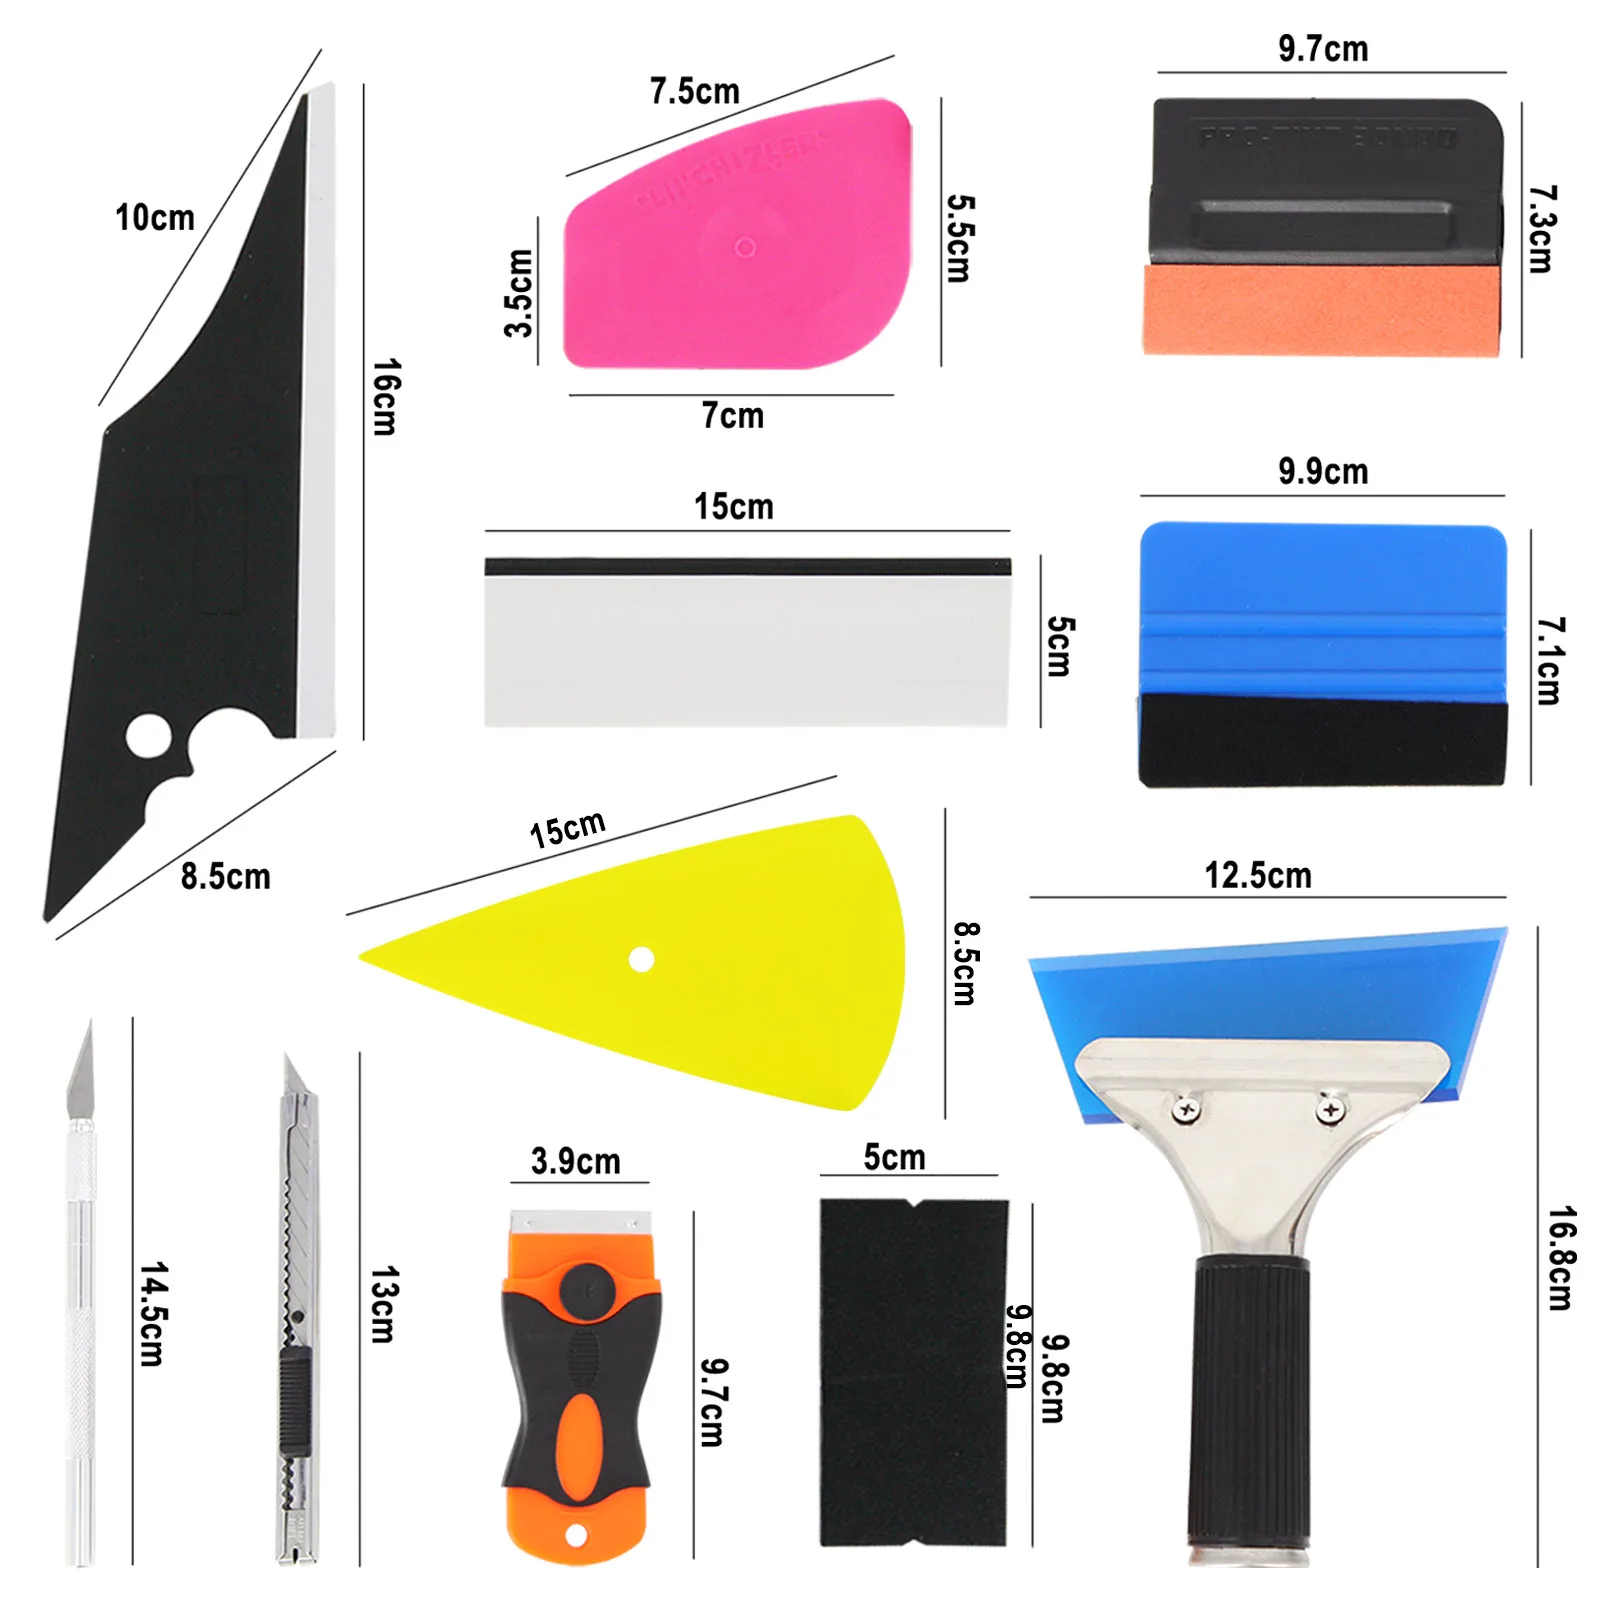 TOFAR Car Vinyl Wrap Tools Set Window Tint Kit Rubber PPF Squeegee Film  Application Sticker Cutter Magnet Scraper Cleaning Wiper - AliExpress